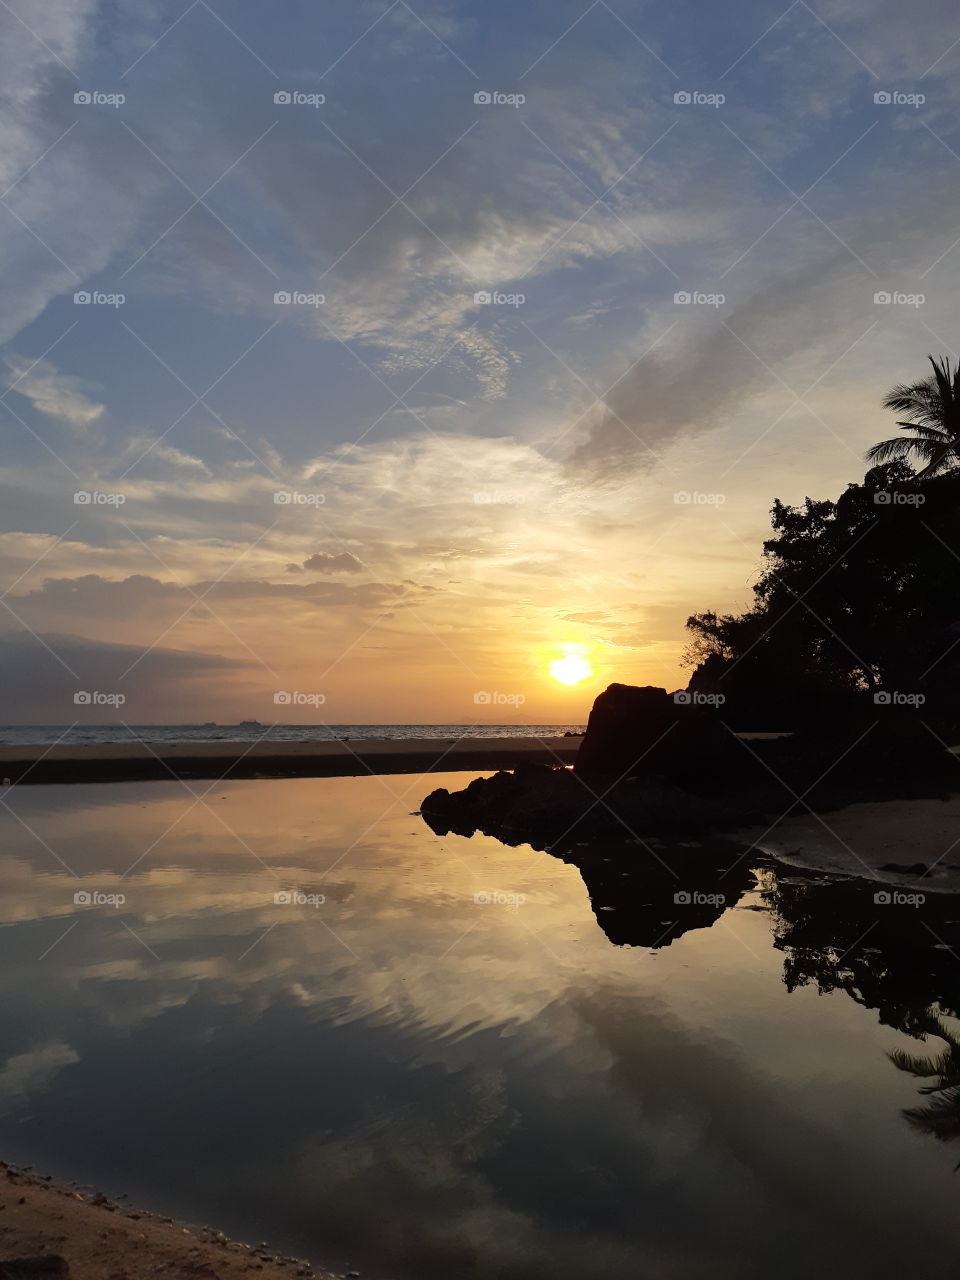 sunset on a beach of Koh Samui (Thailand)